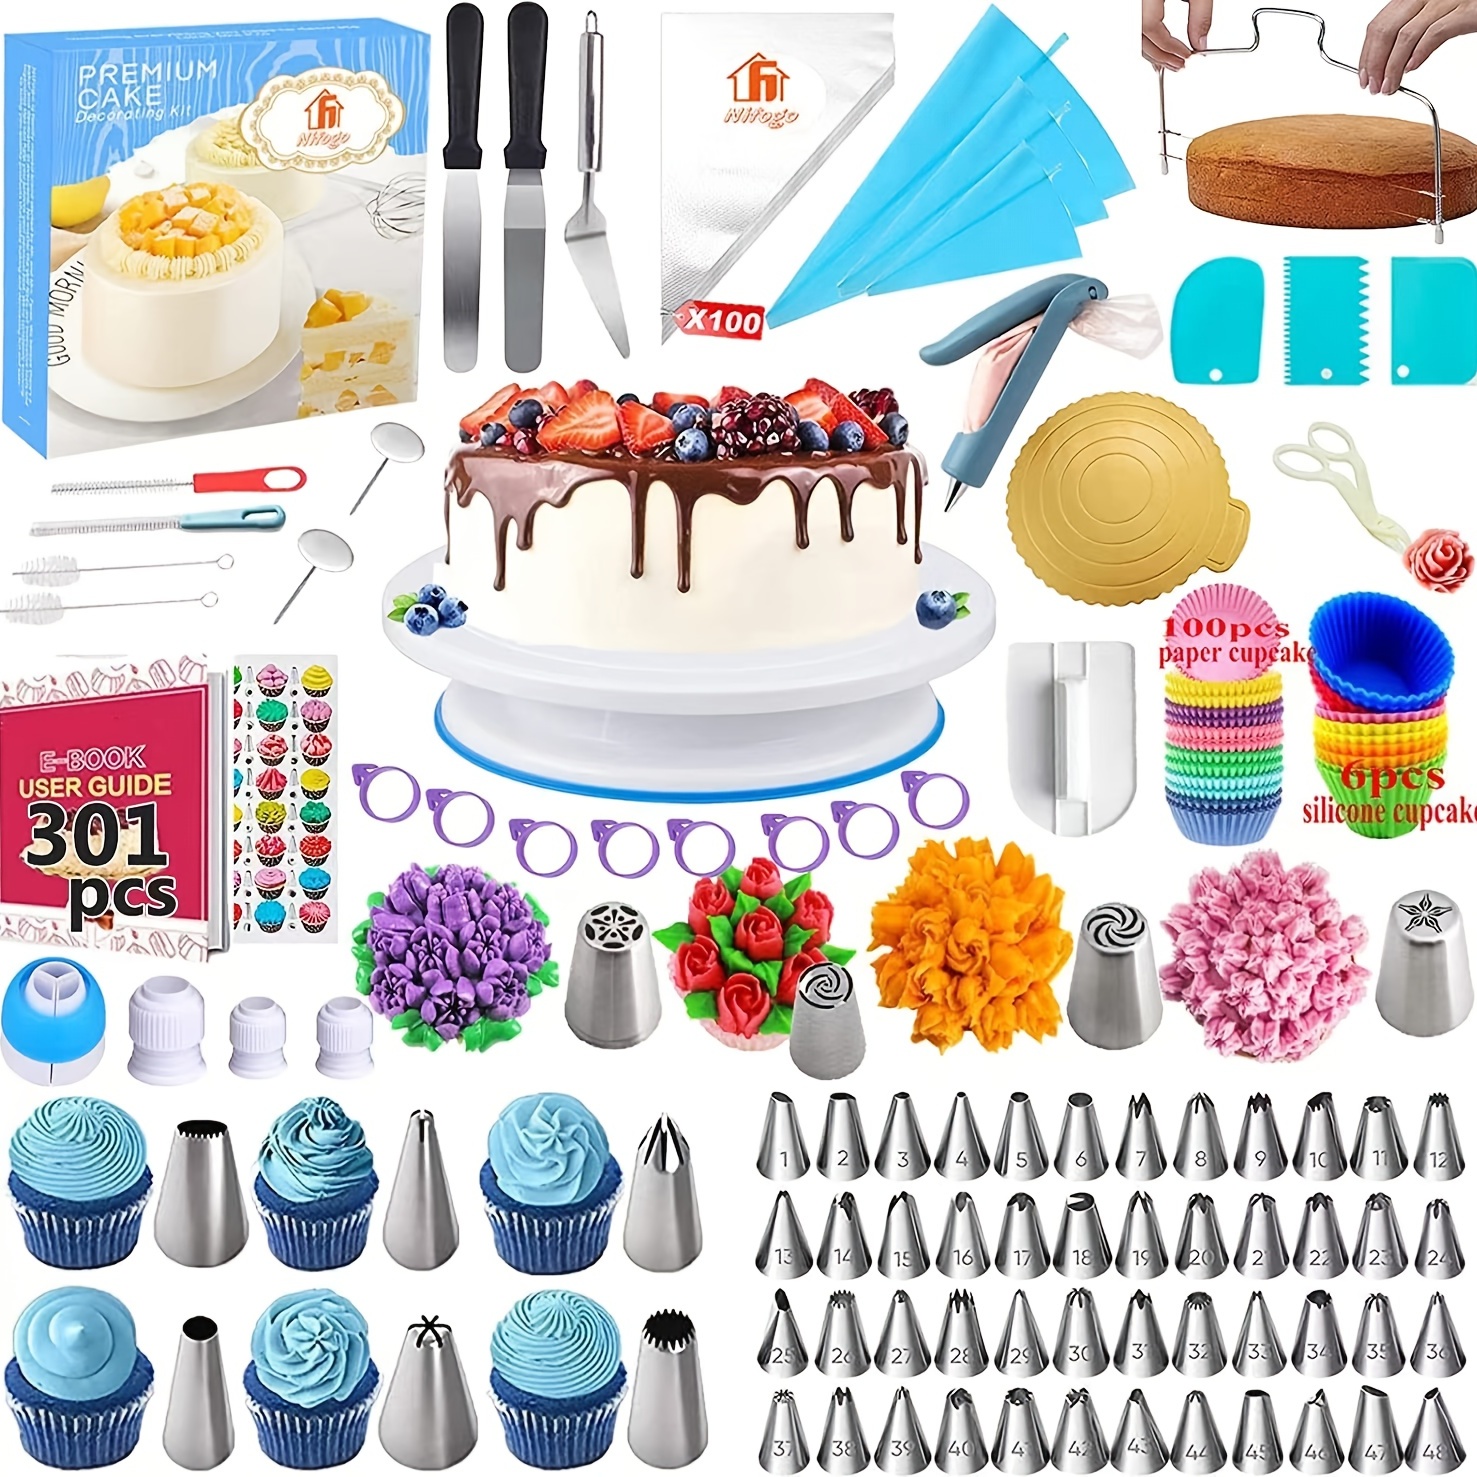 Suzi Pesti - Cake Decorator/ Pastry Chef - Cakes by Suzi | LinkedIn